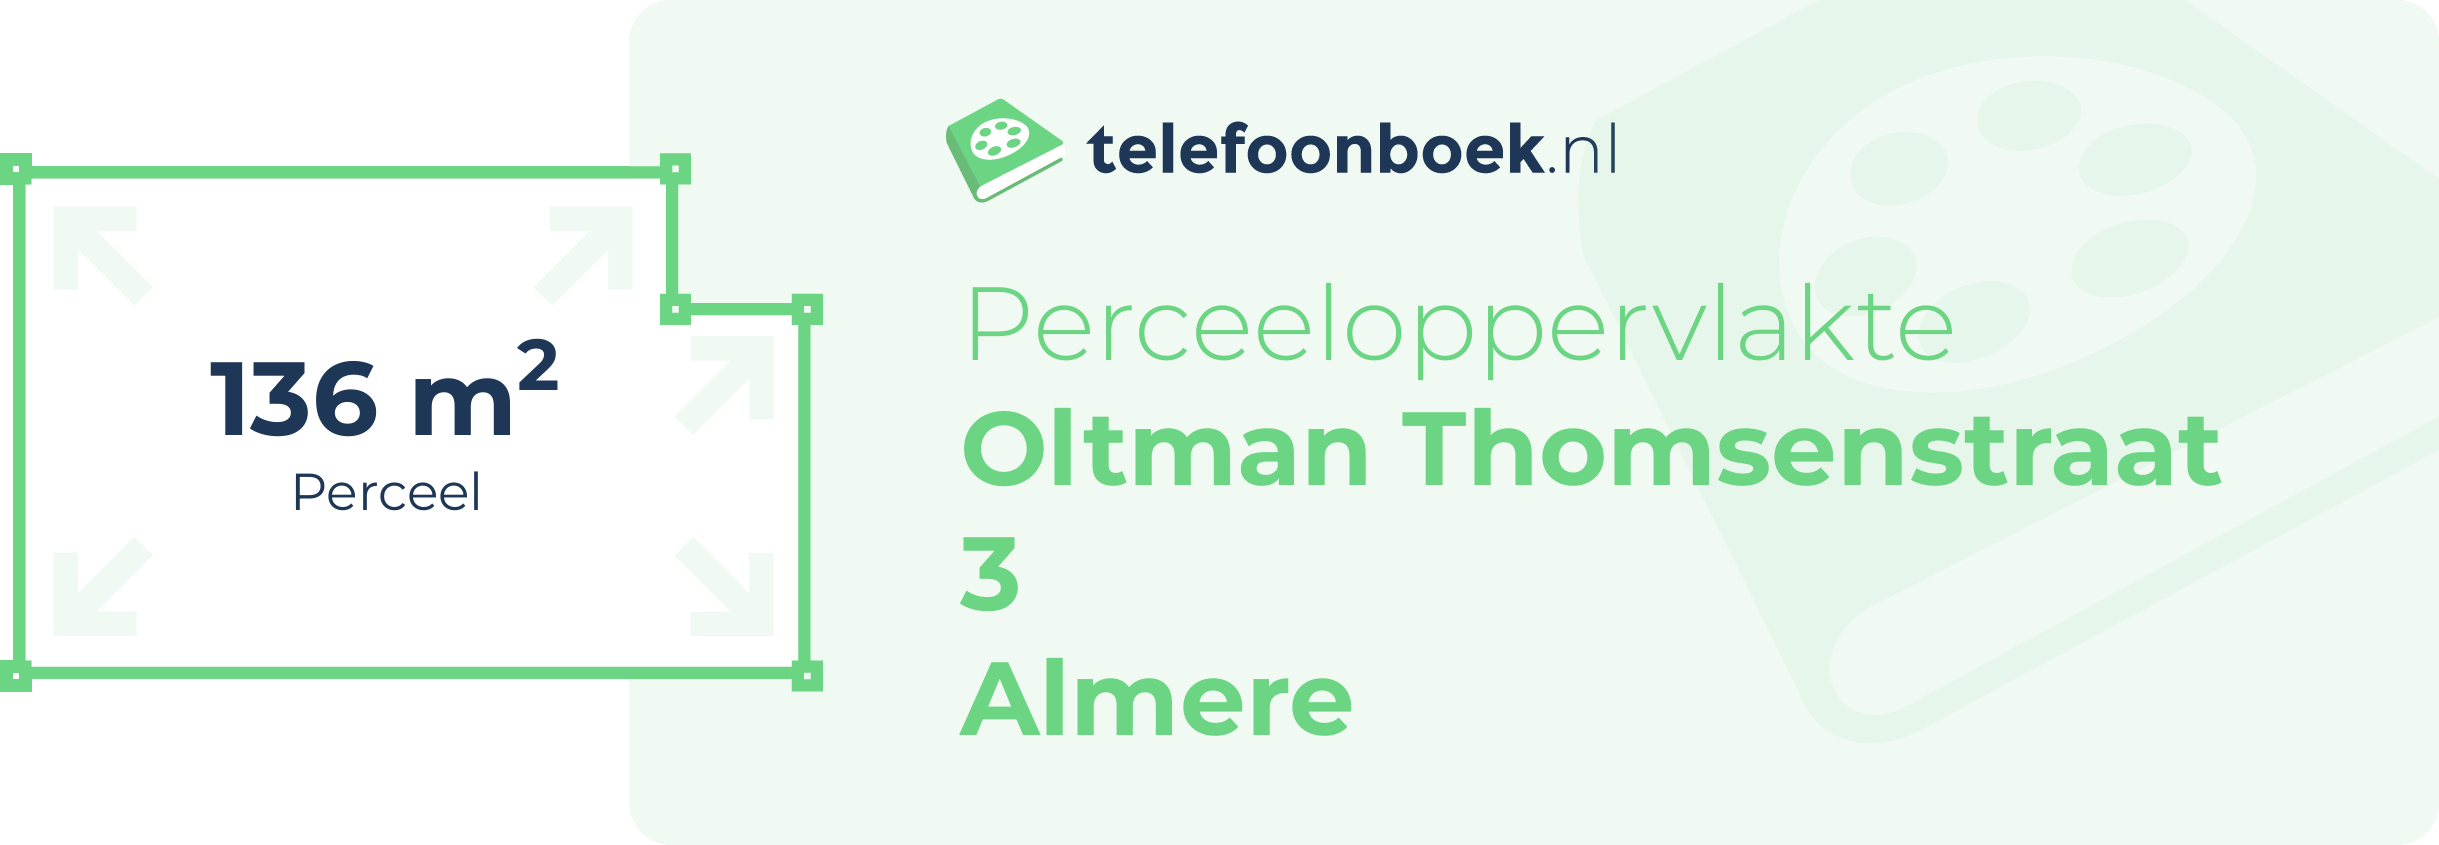 Perceeloppervlakte Oltman Thomsenstraat 3 Almere